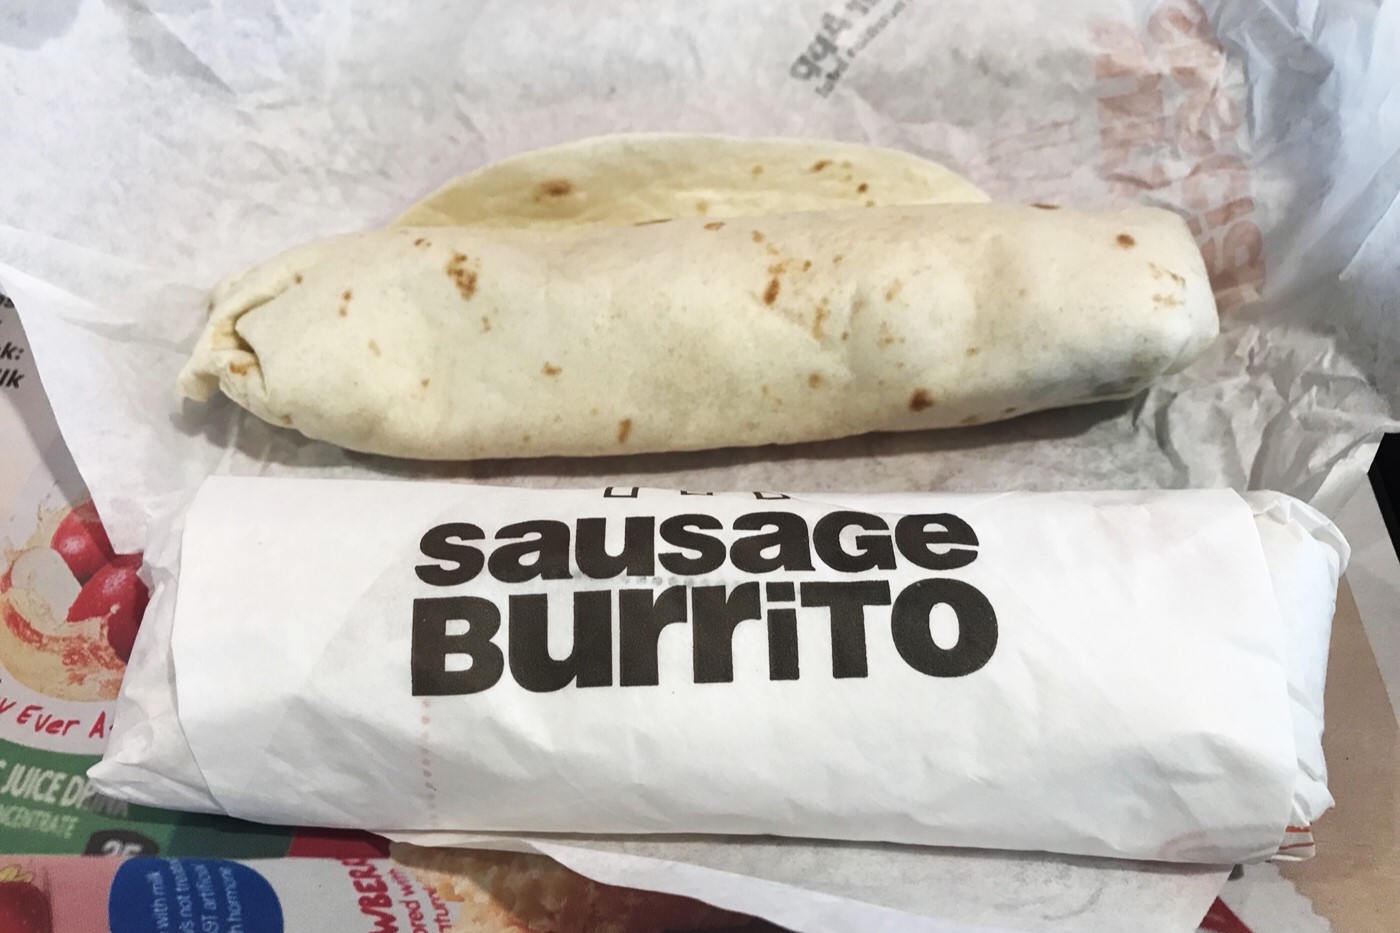 20-mcdonalds-sausage-burrito-nutrition-facts